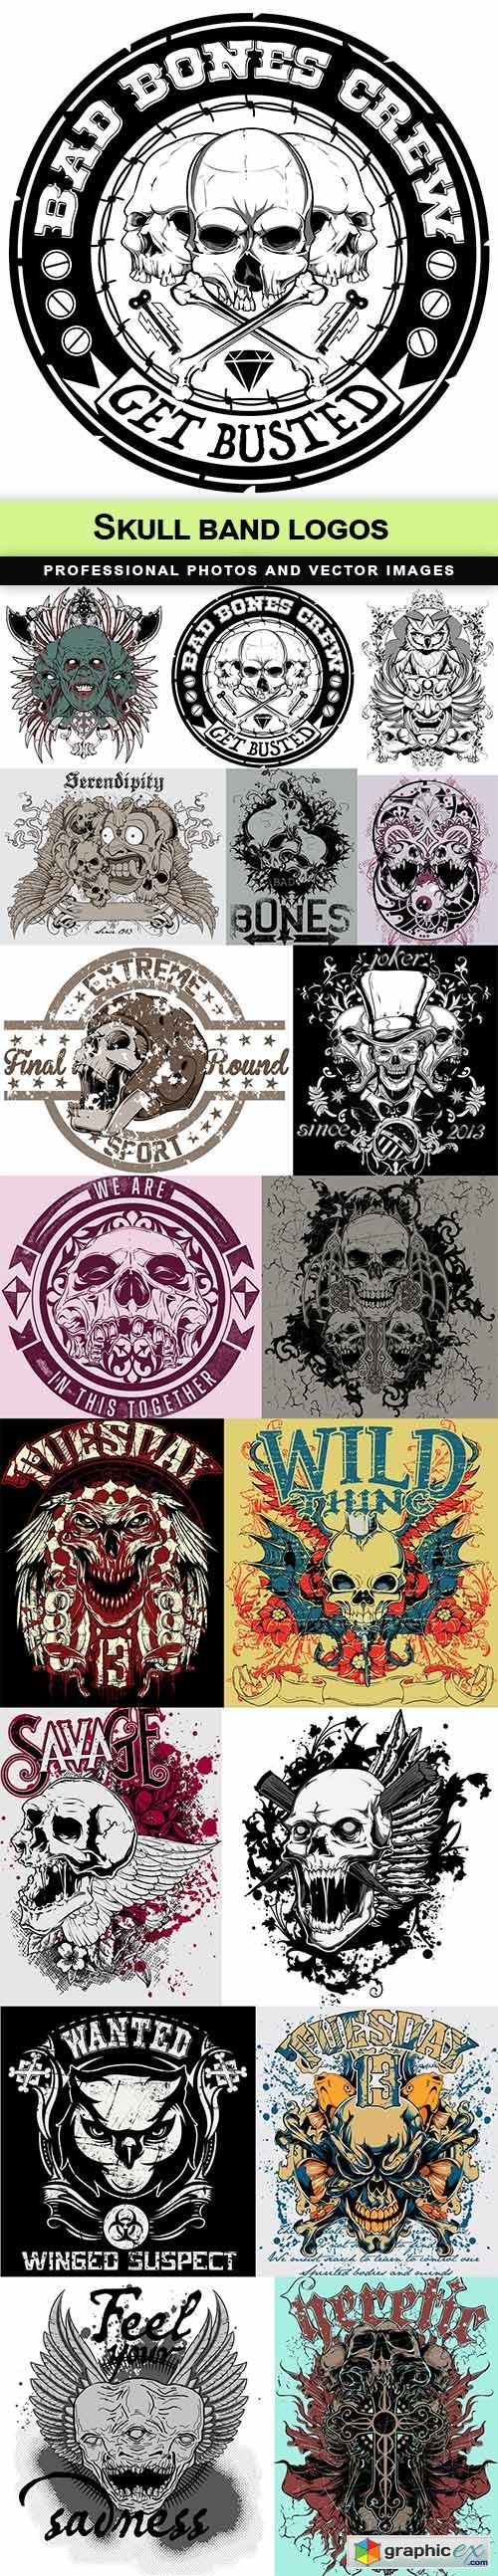 Skull band logos - 18 EPS